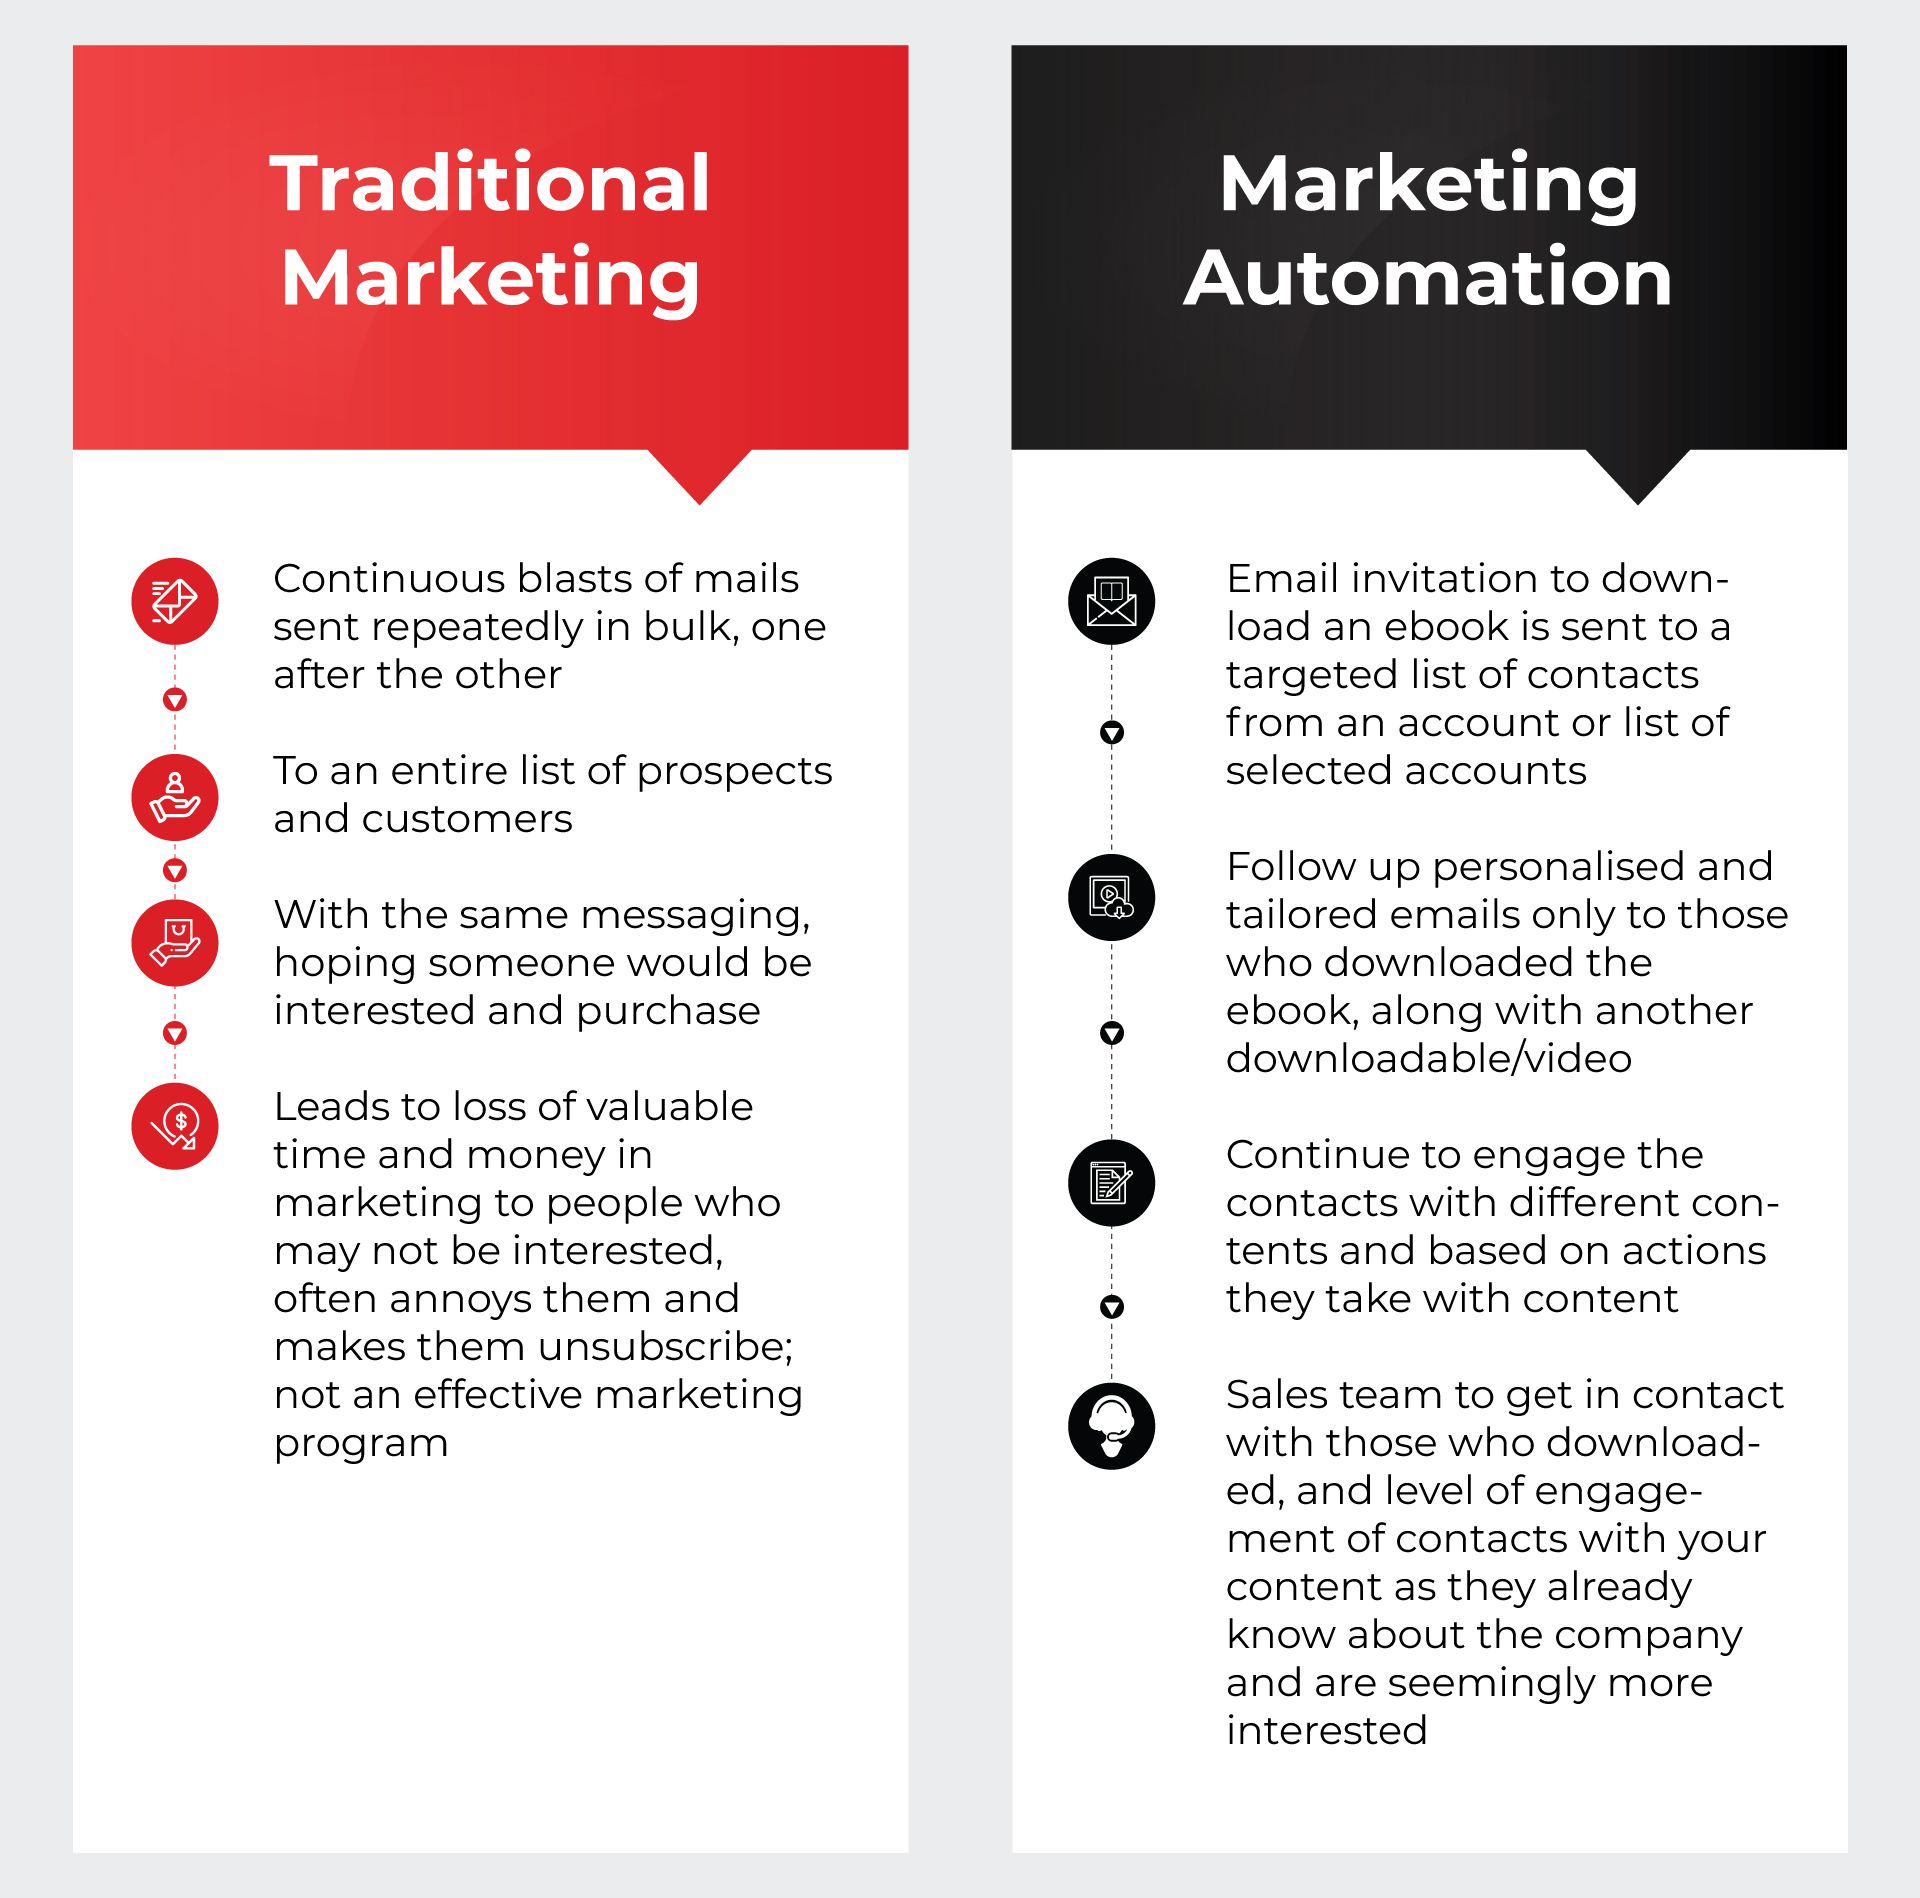 Marketing Automation vs. traditional marketing